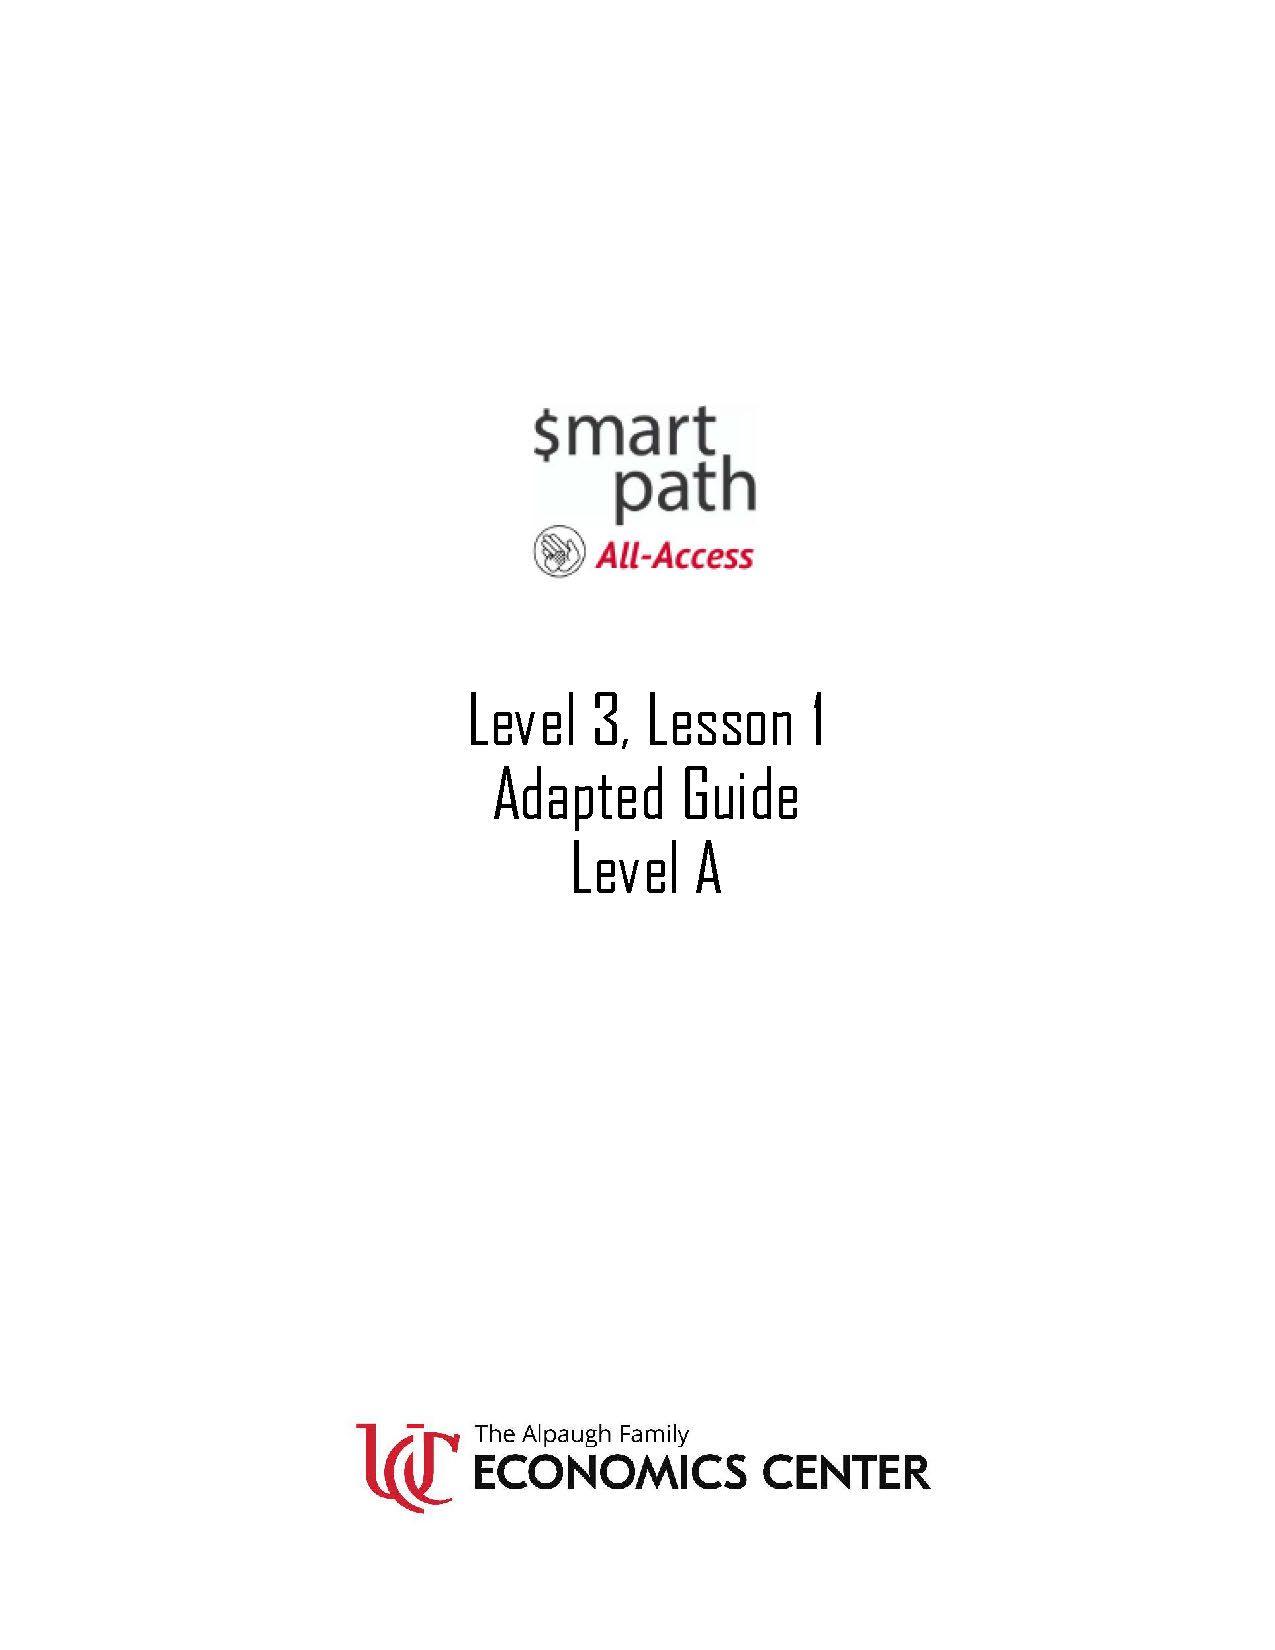 Level 3 Lesson 1 Cover